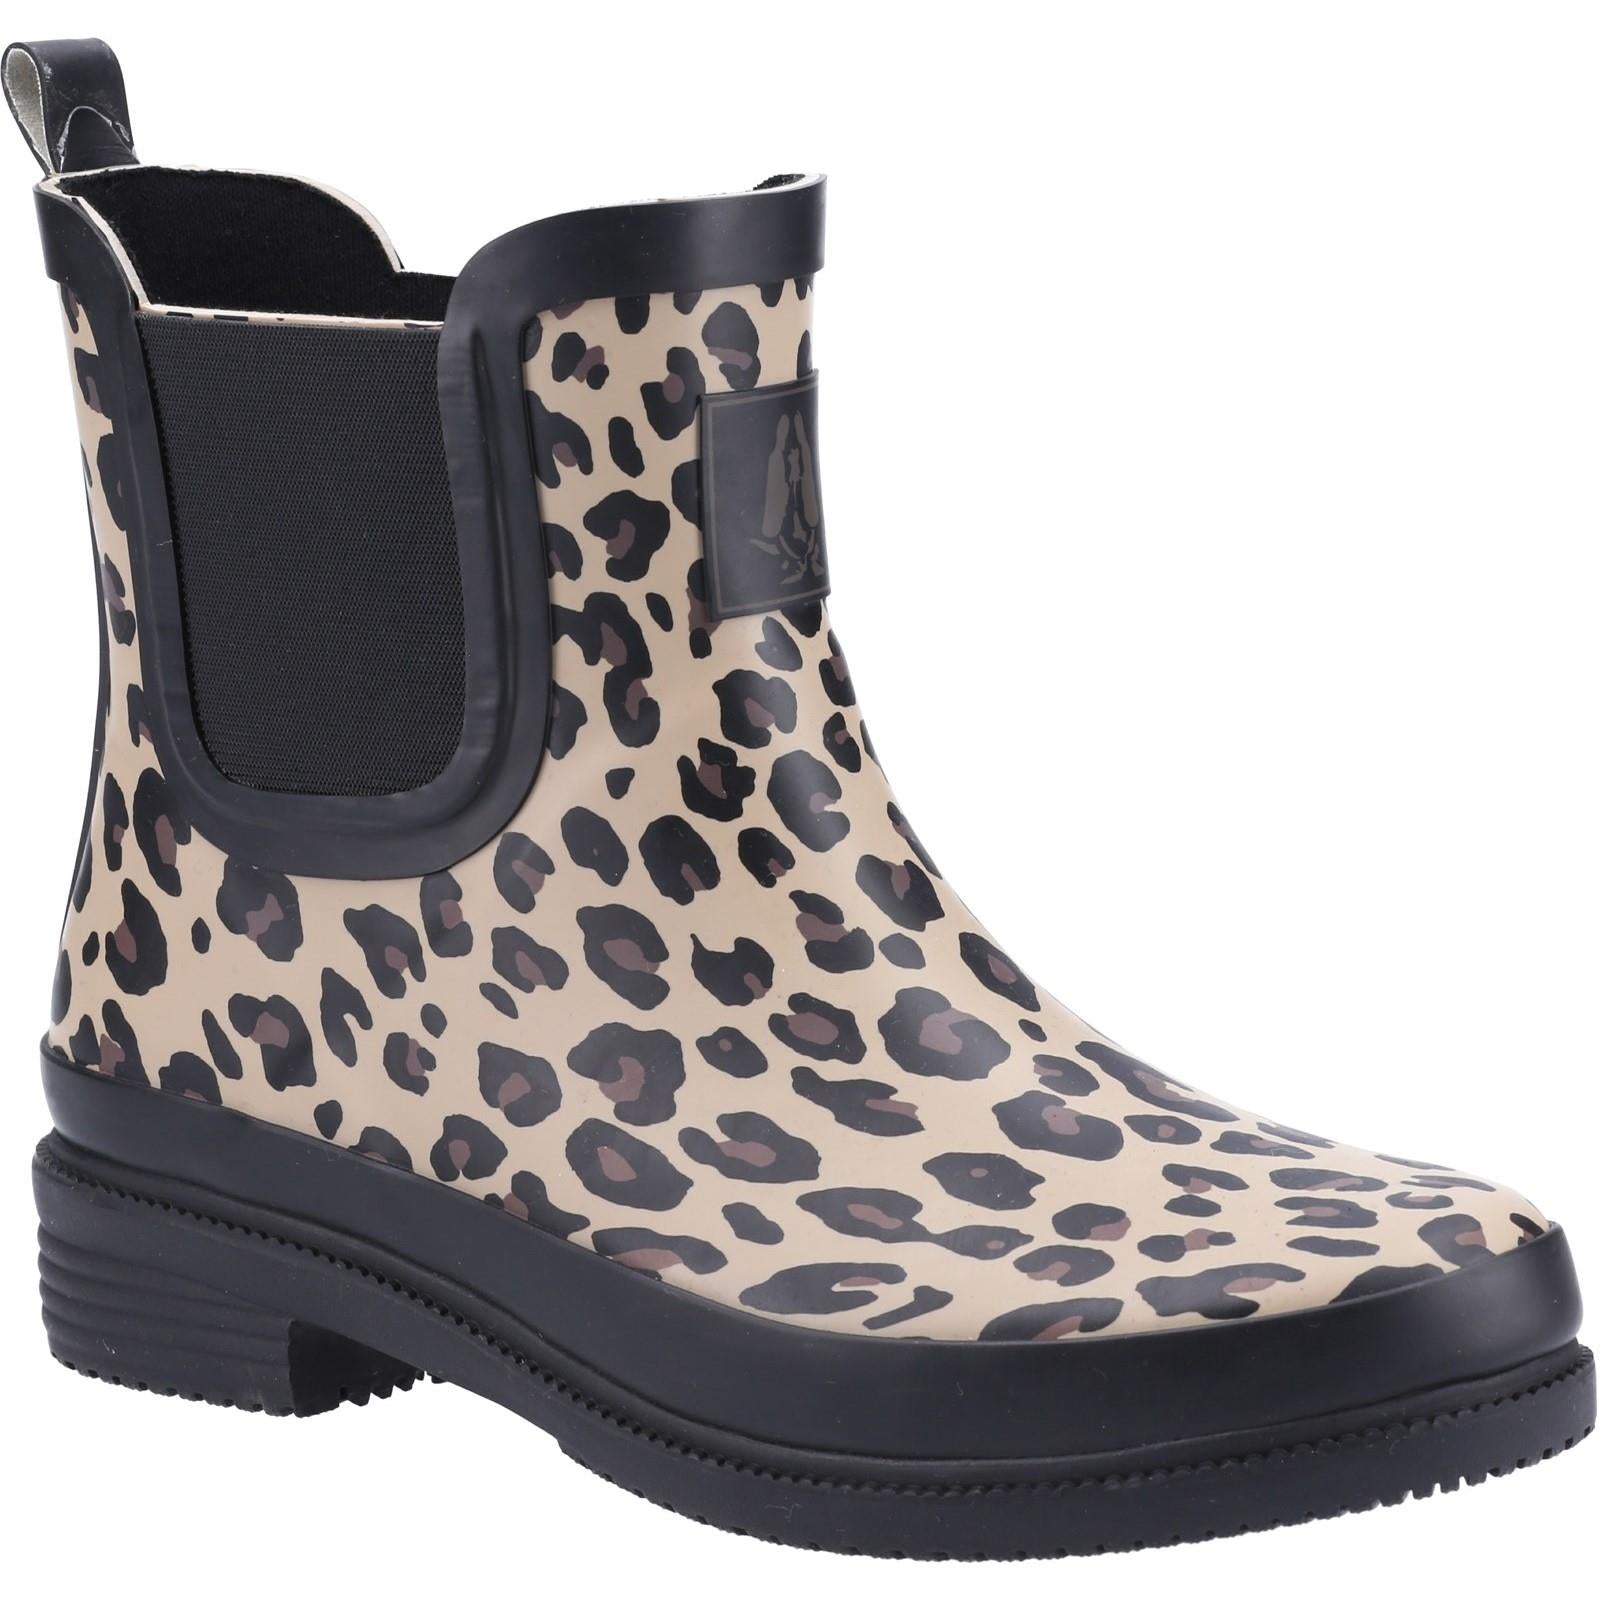 Hush Puppies Minnie leopard print ladies waterproof ankle wellington boots